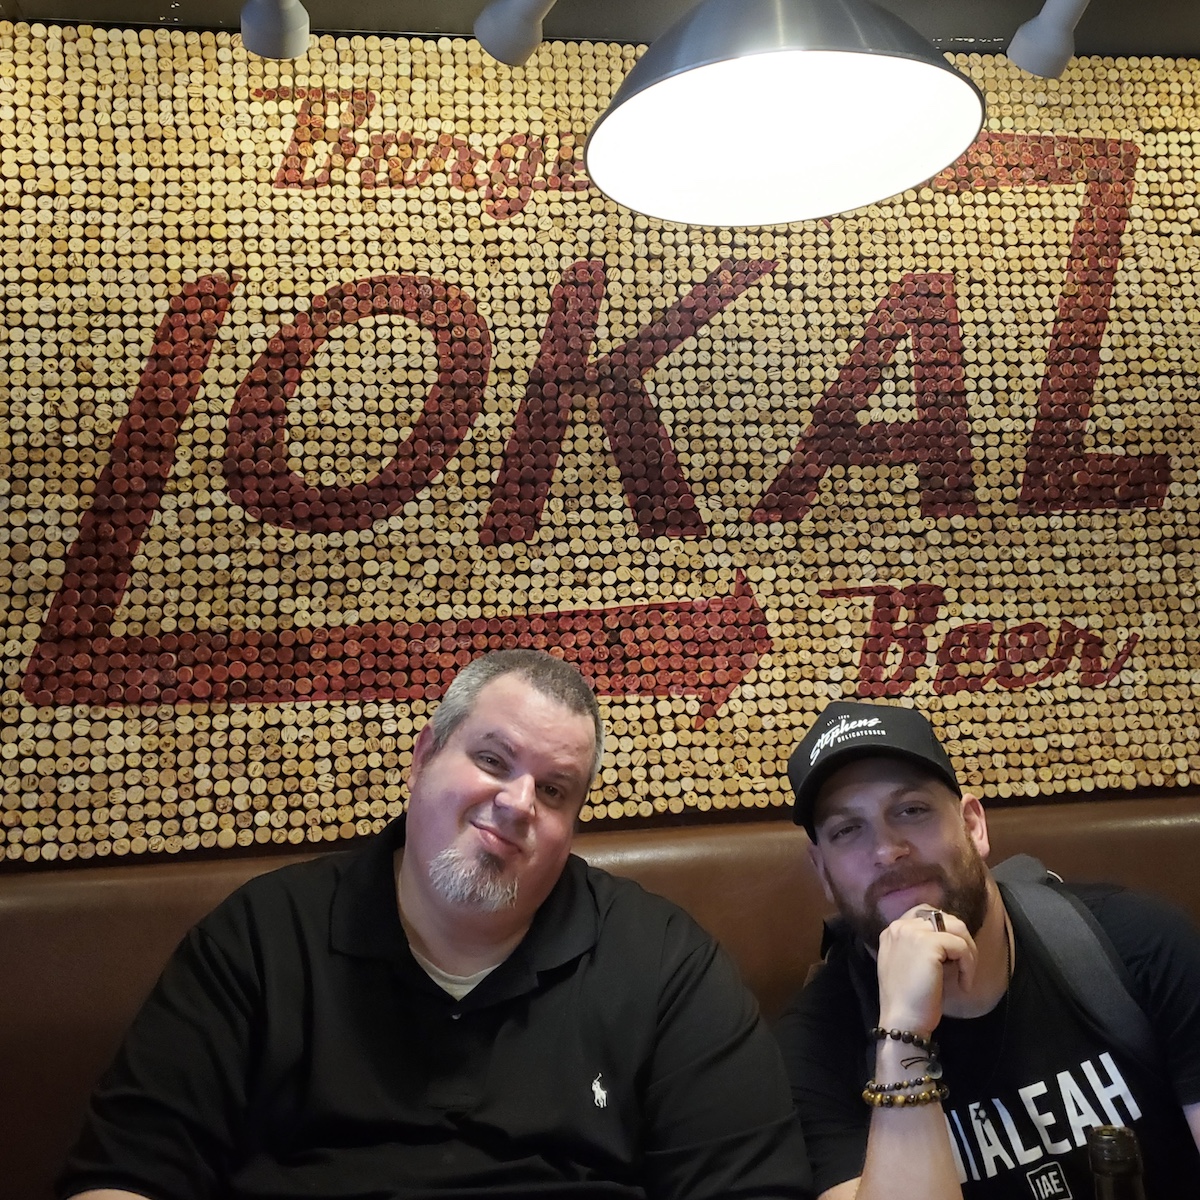 Burger Beast and owner Matt Kusher at LoKal in Coconut Grove, Florida